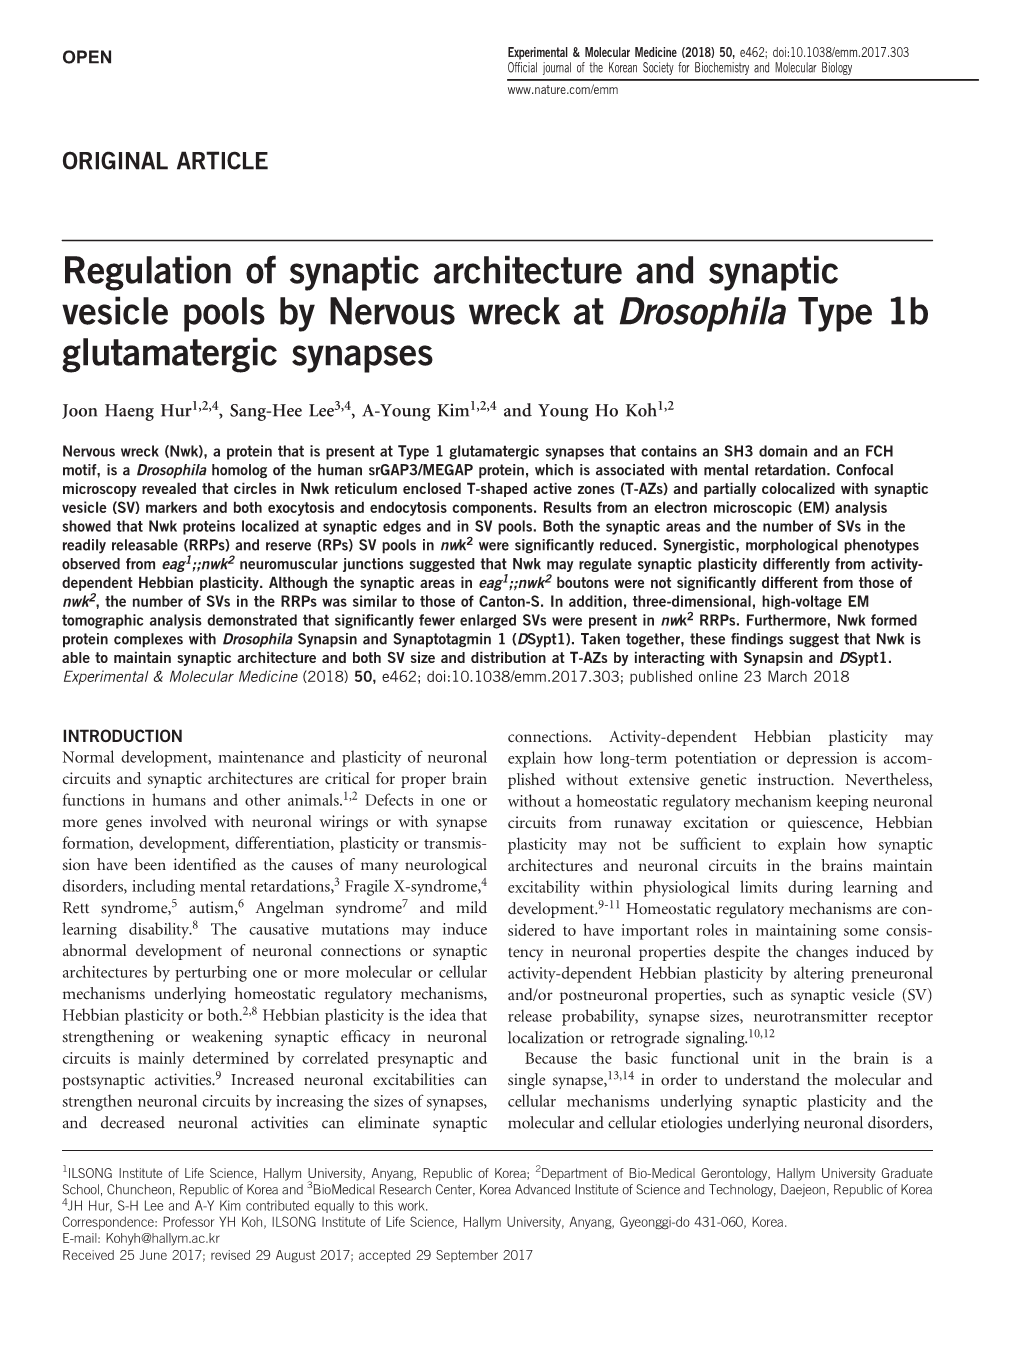 Regulation of Synaptic Architecture and Synaptic Vesicle Pools by Nervous Wreck at Drosophila Type 1B Glutamatergic Synapses